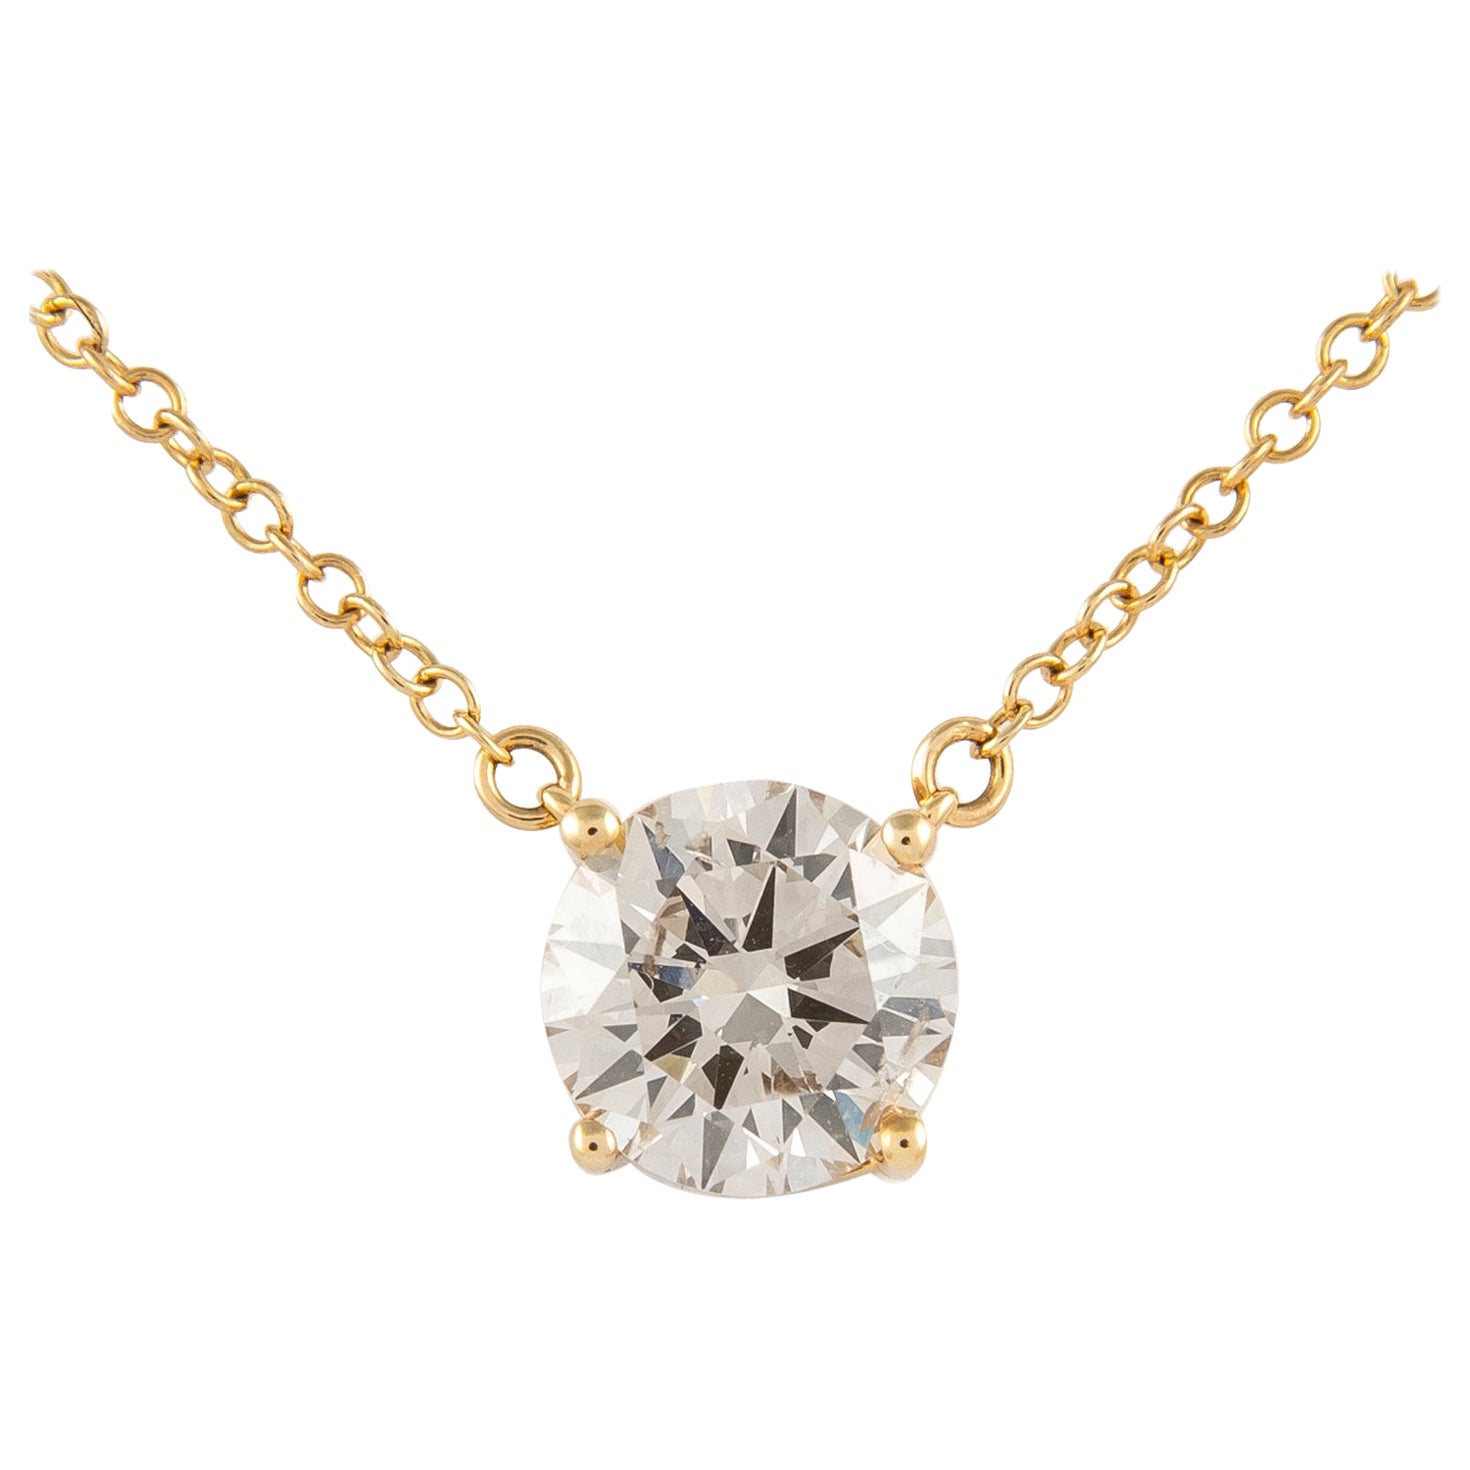 Alexander 1.51 Carats Diamond Solitaire Pendant Necklace Yellow Gold